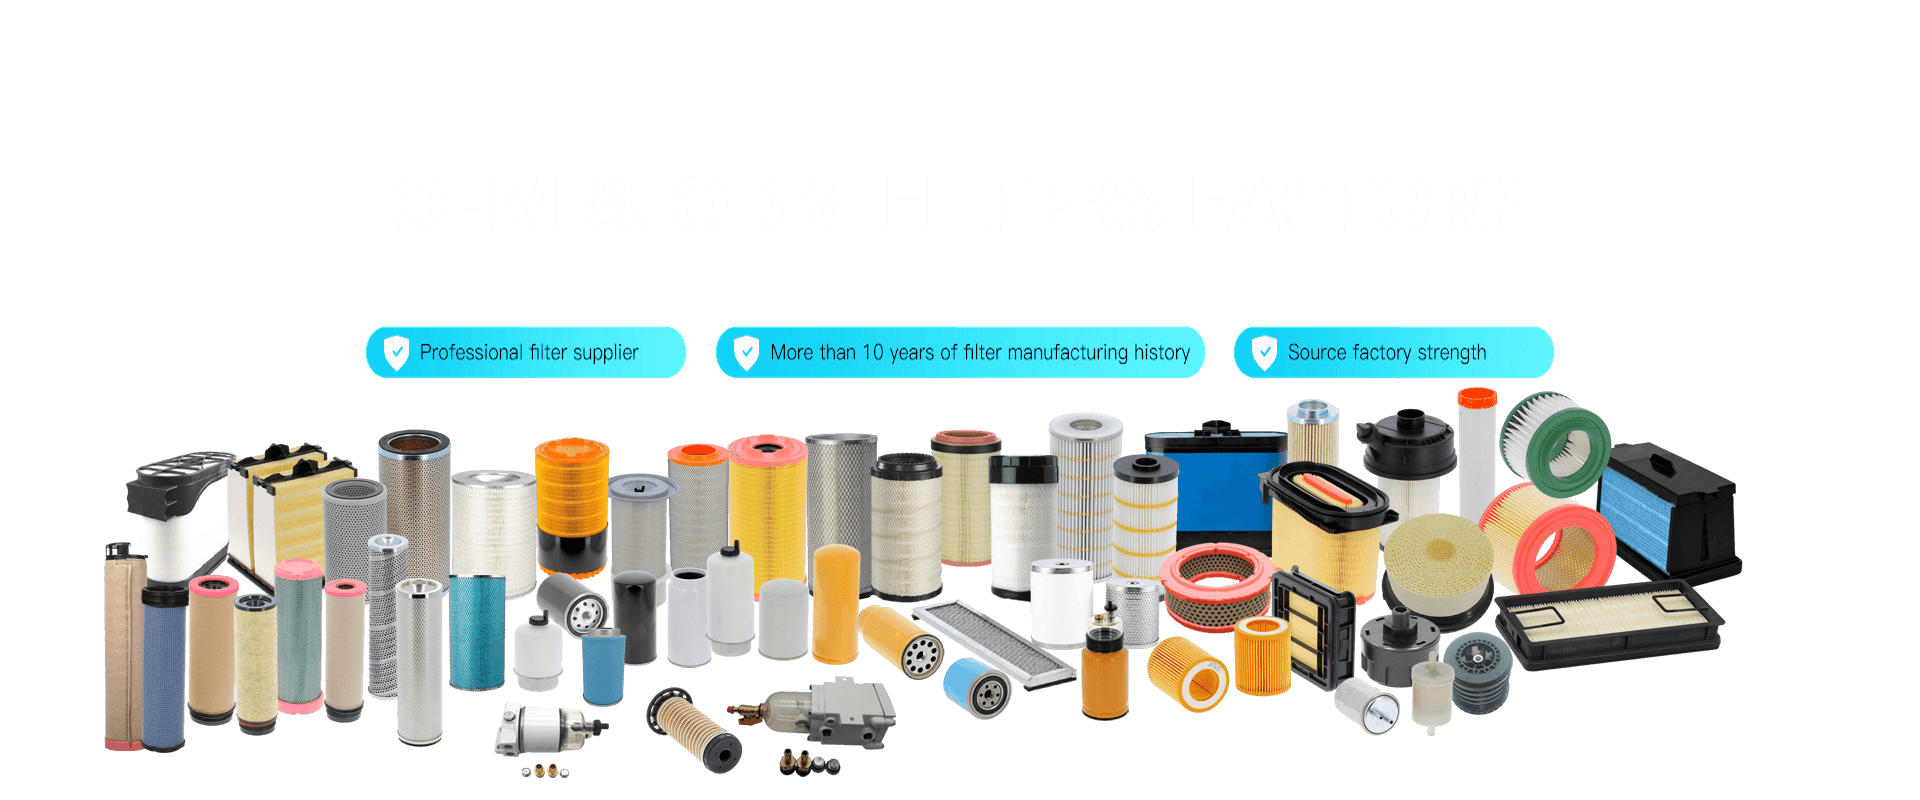 OEM & ODM FILTERS FACTORY